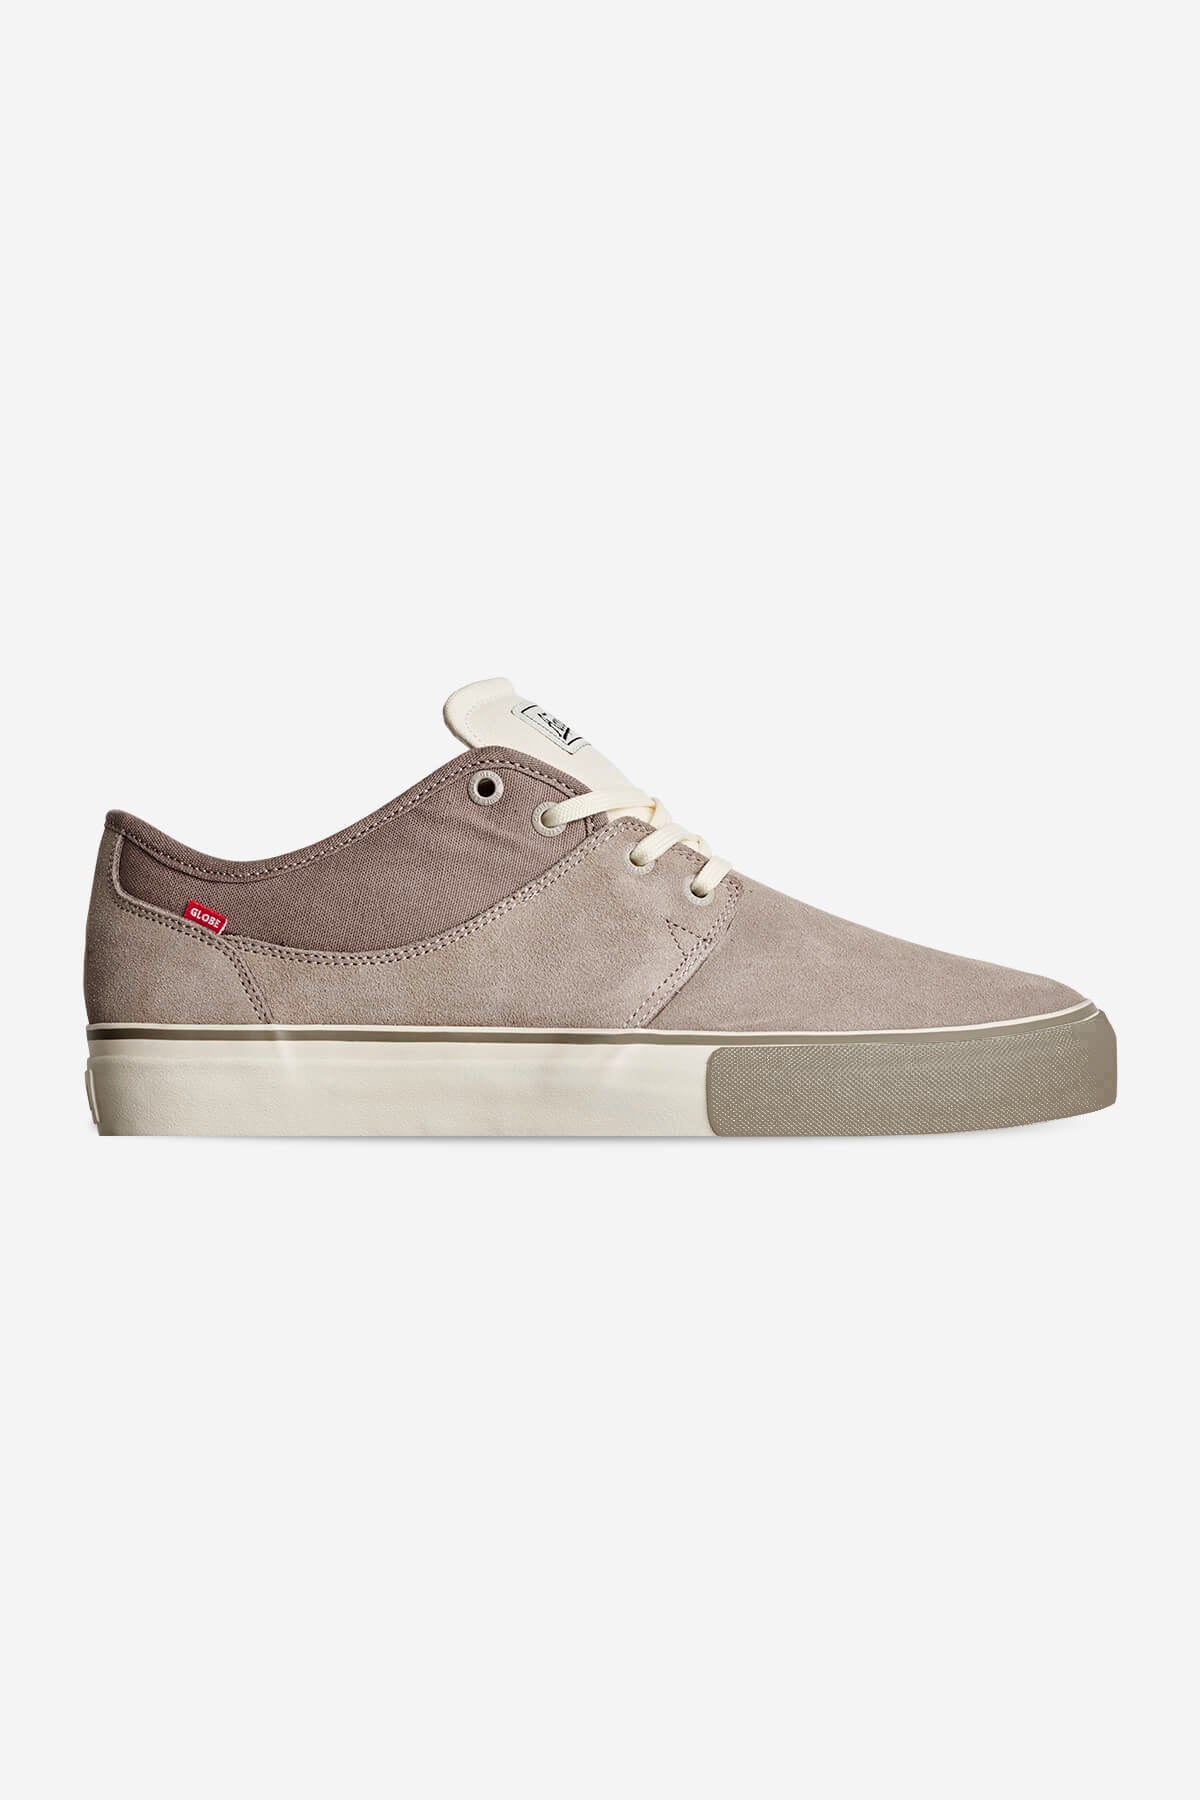 Mahalo - Taupe/Antik - skateboard Schuhe